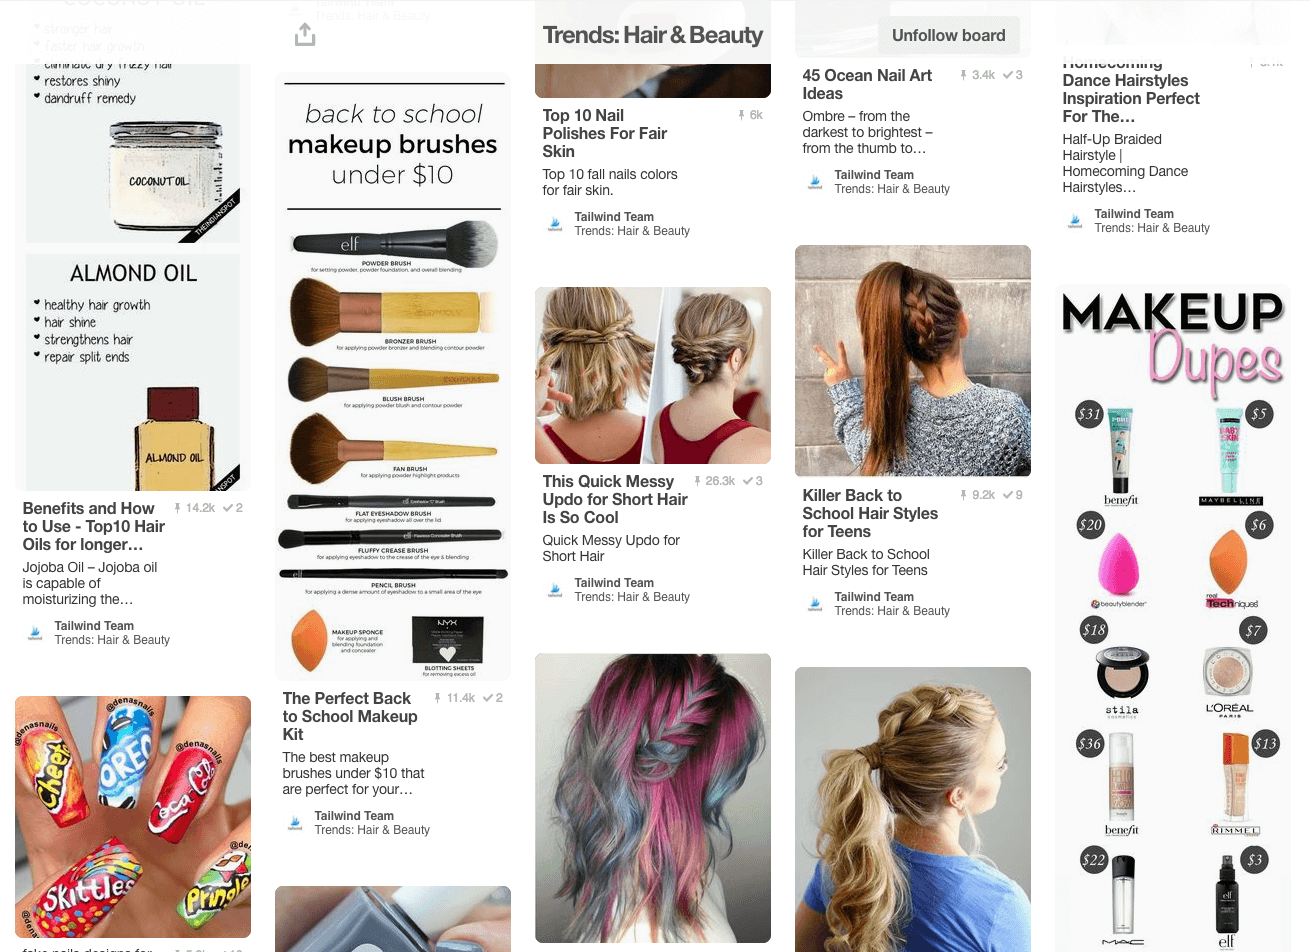 August Hair & Beauty Trends on Pinterest